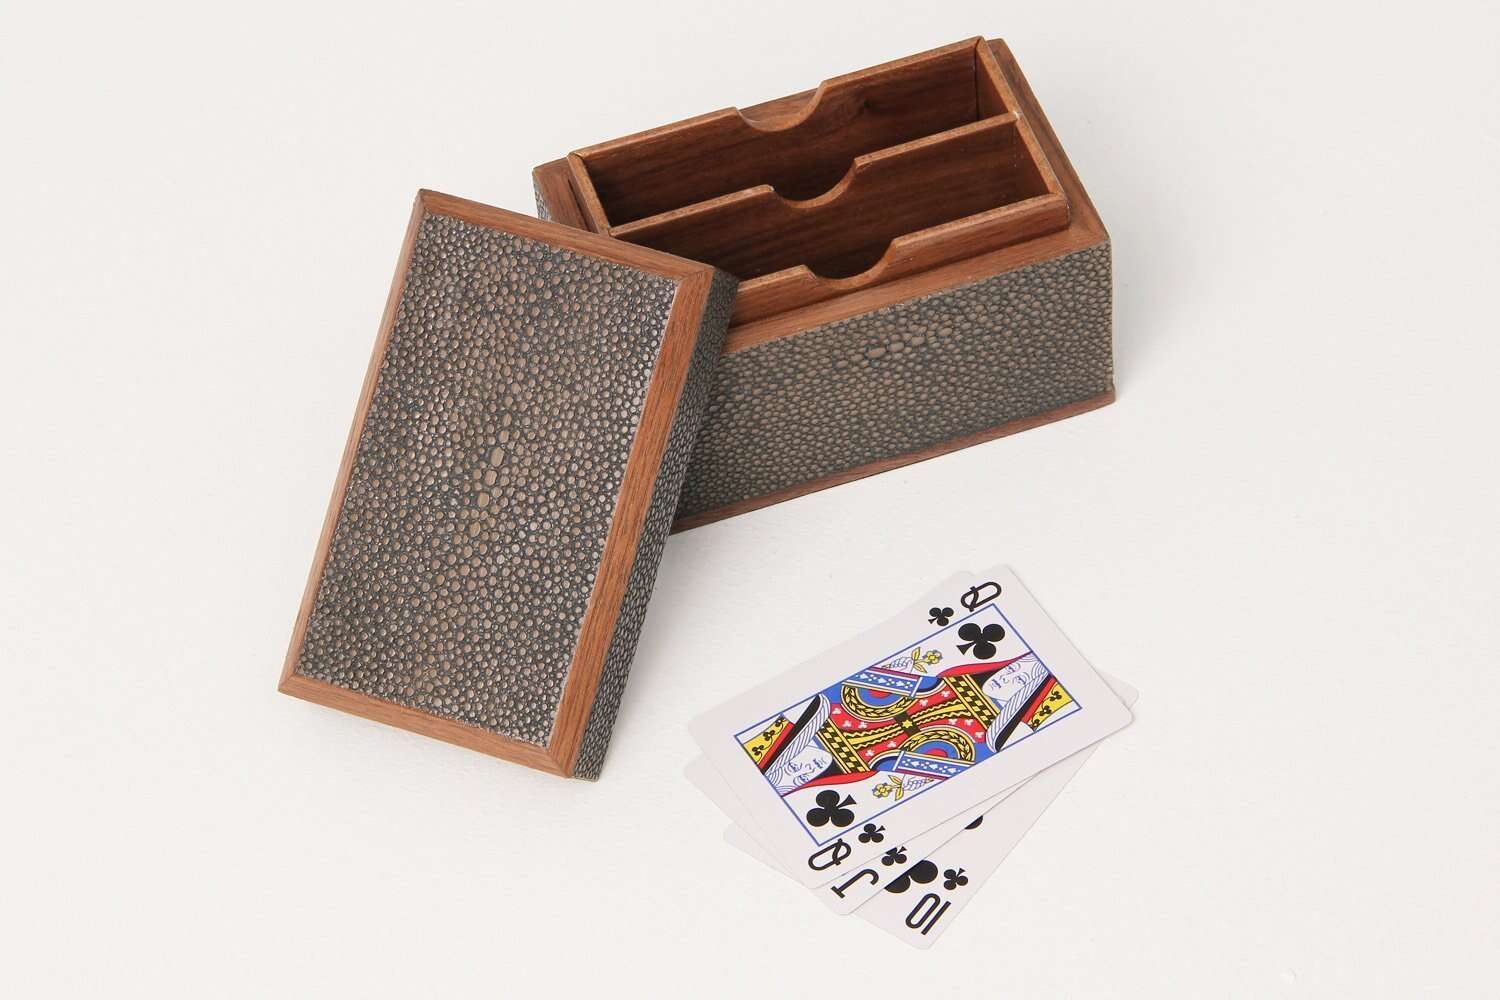  playing card box Forwood Design brown shagreen playing card box